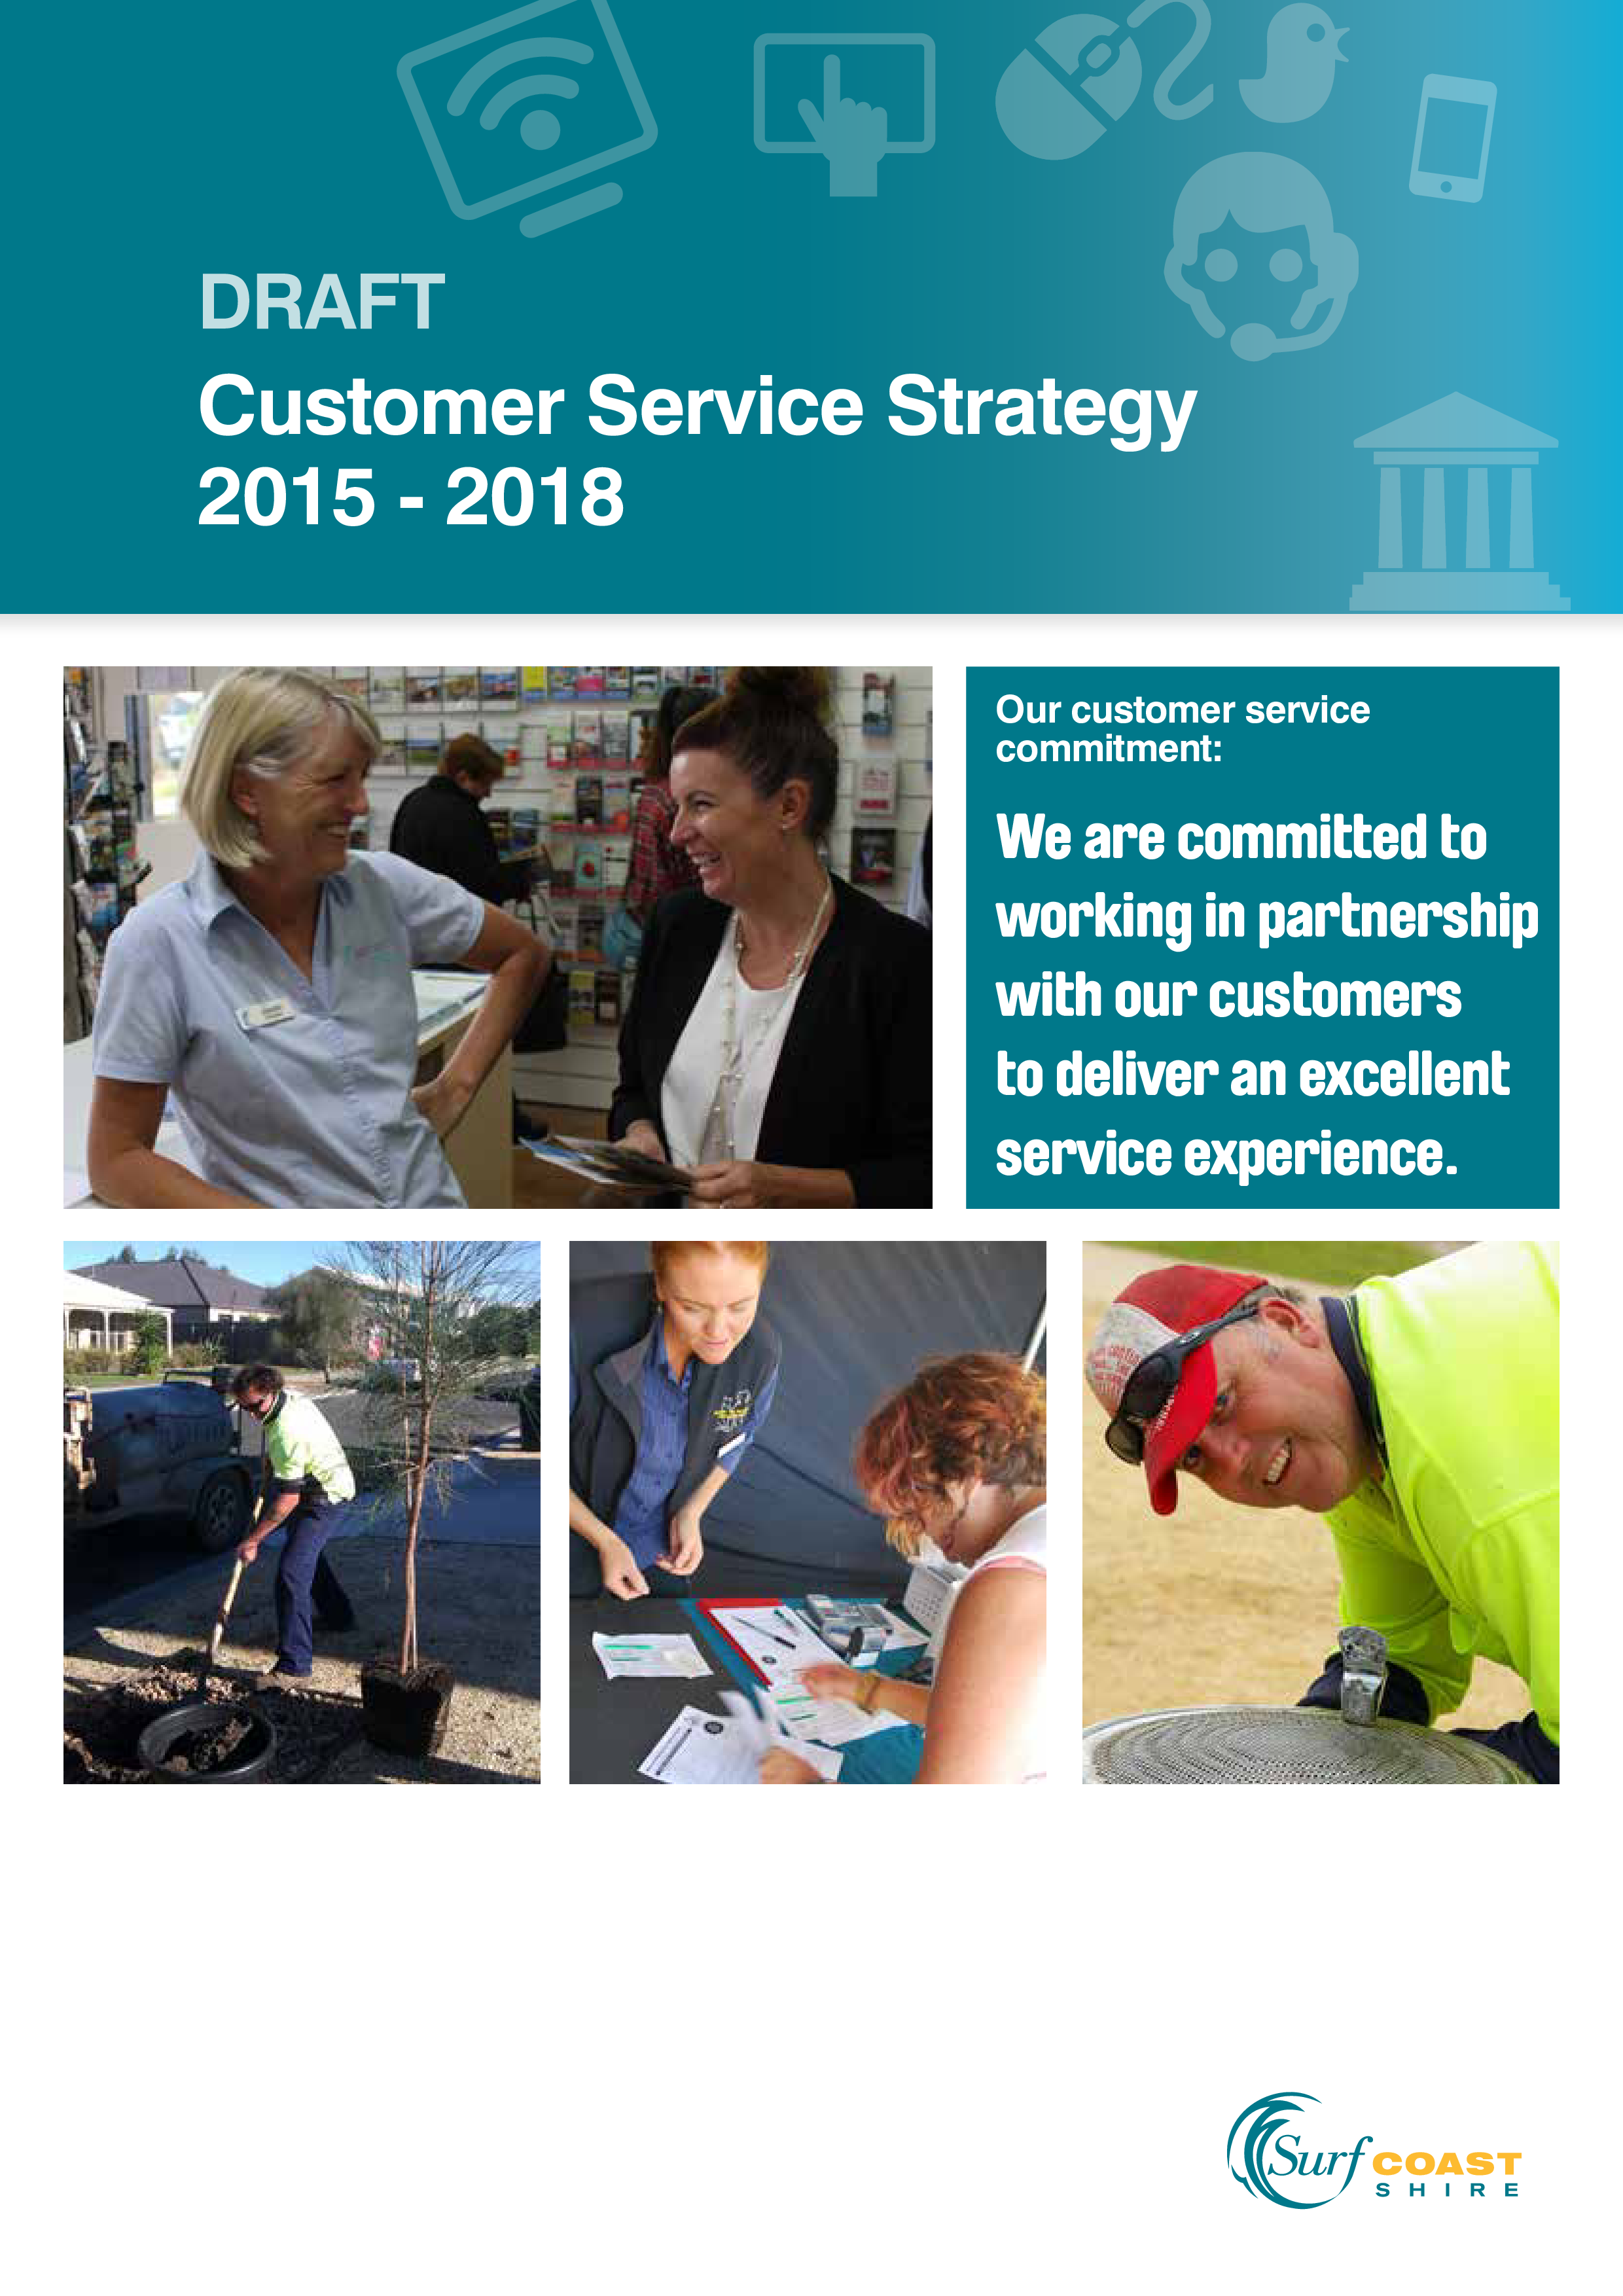 Customer Service Strategy main image